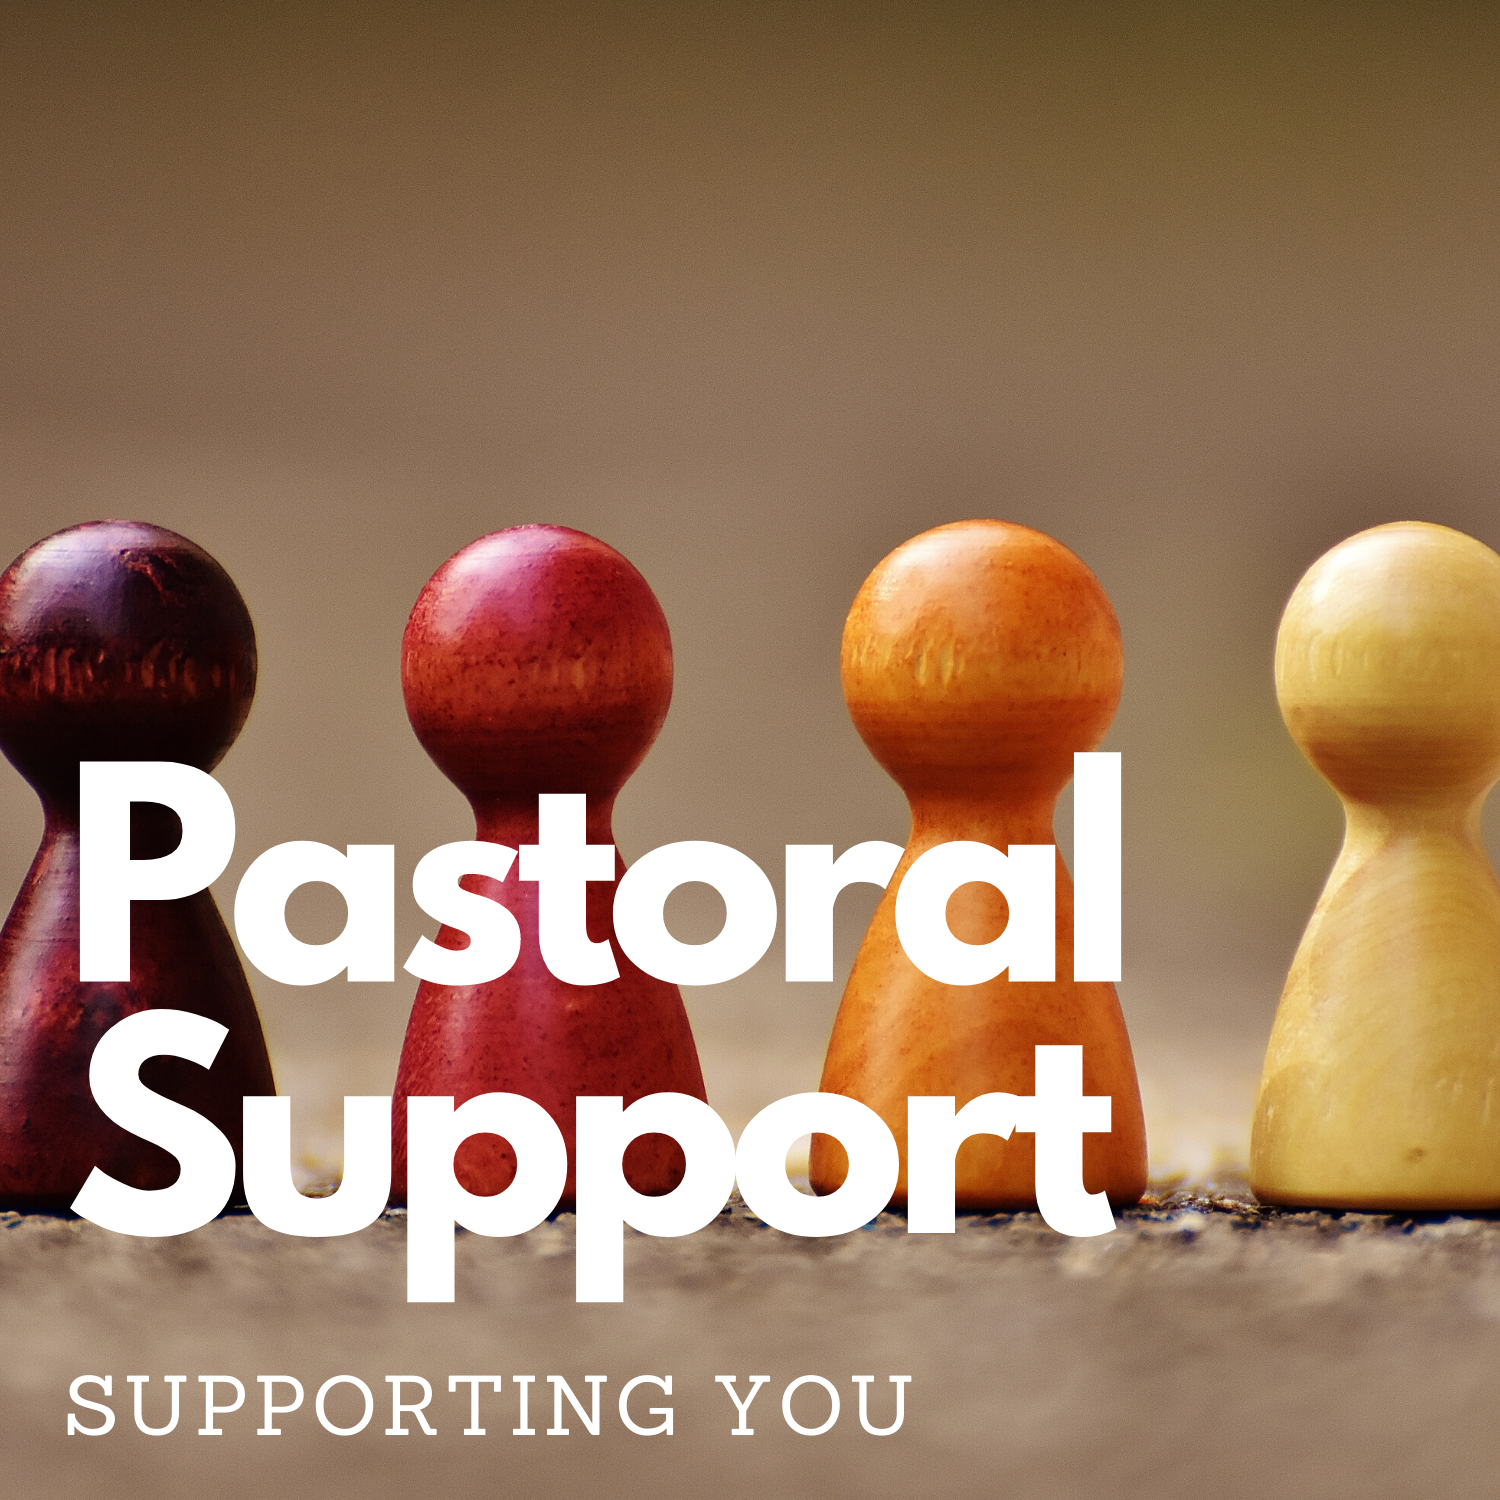 Pastoral support